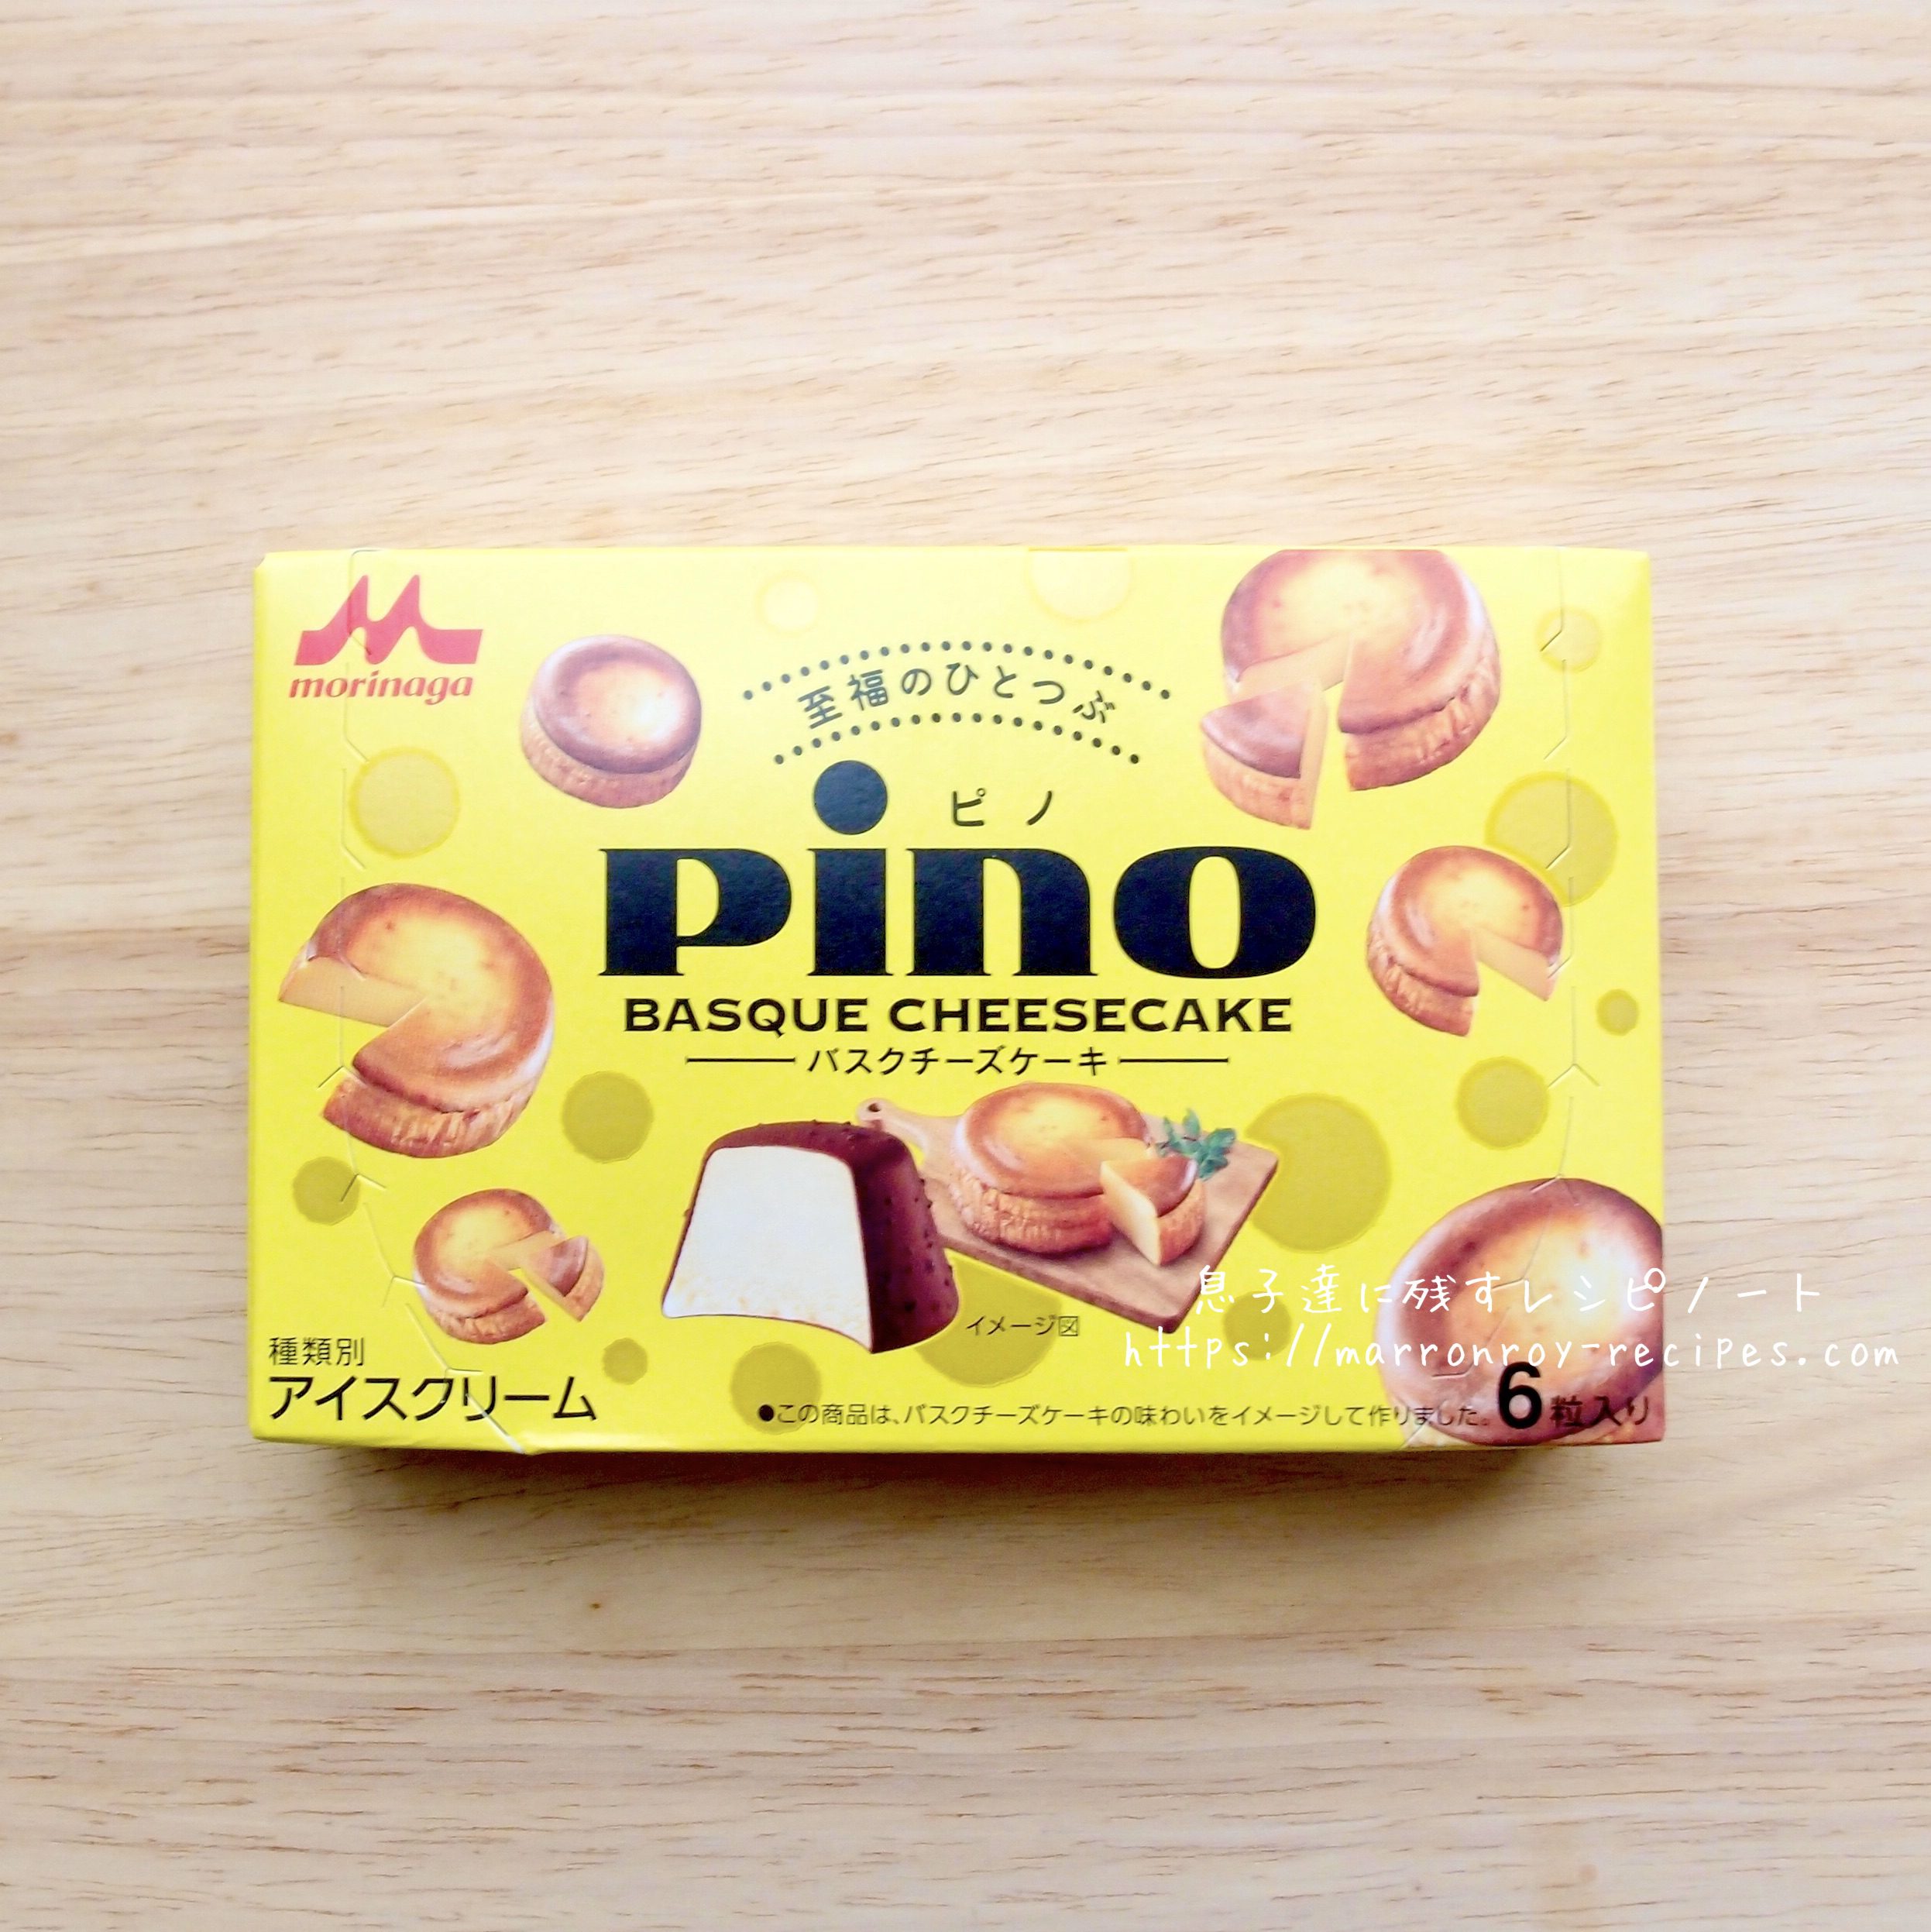 pino box